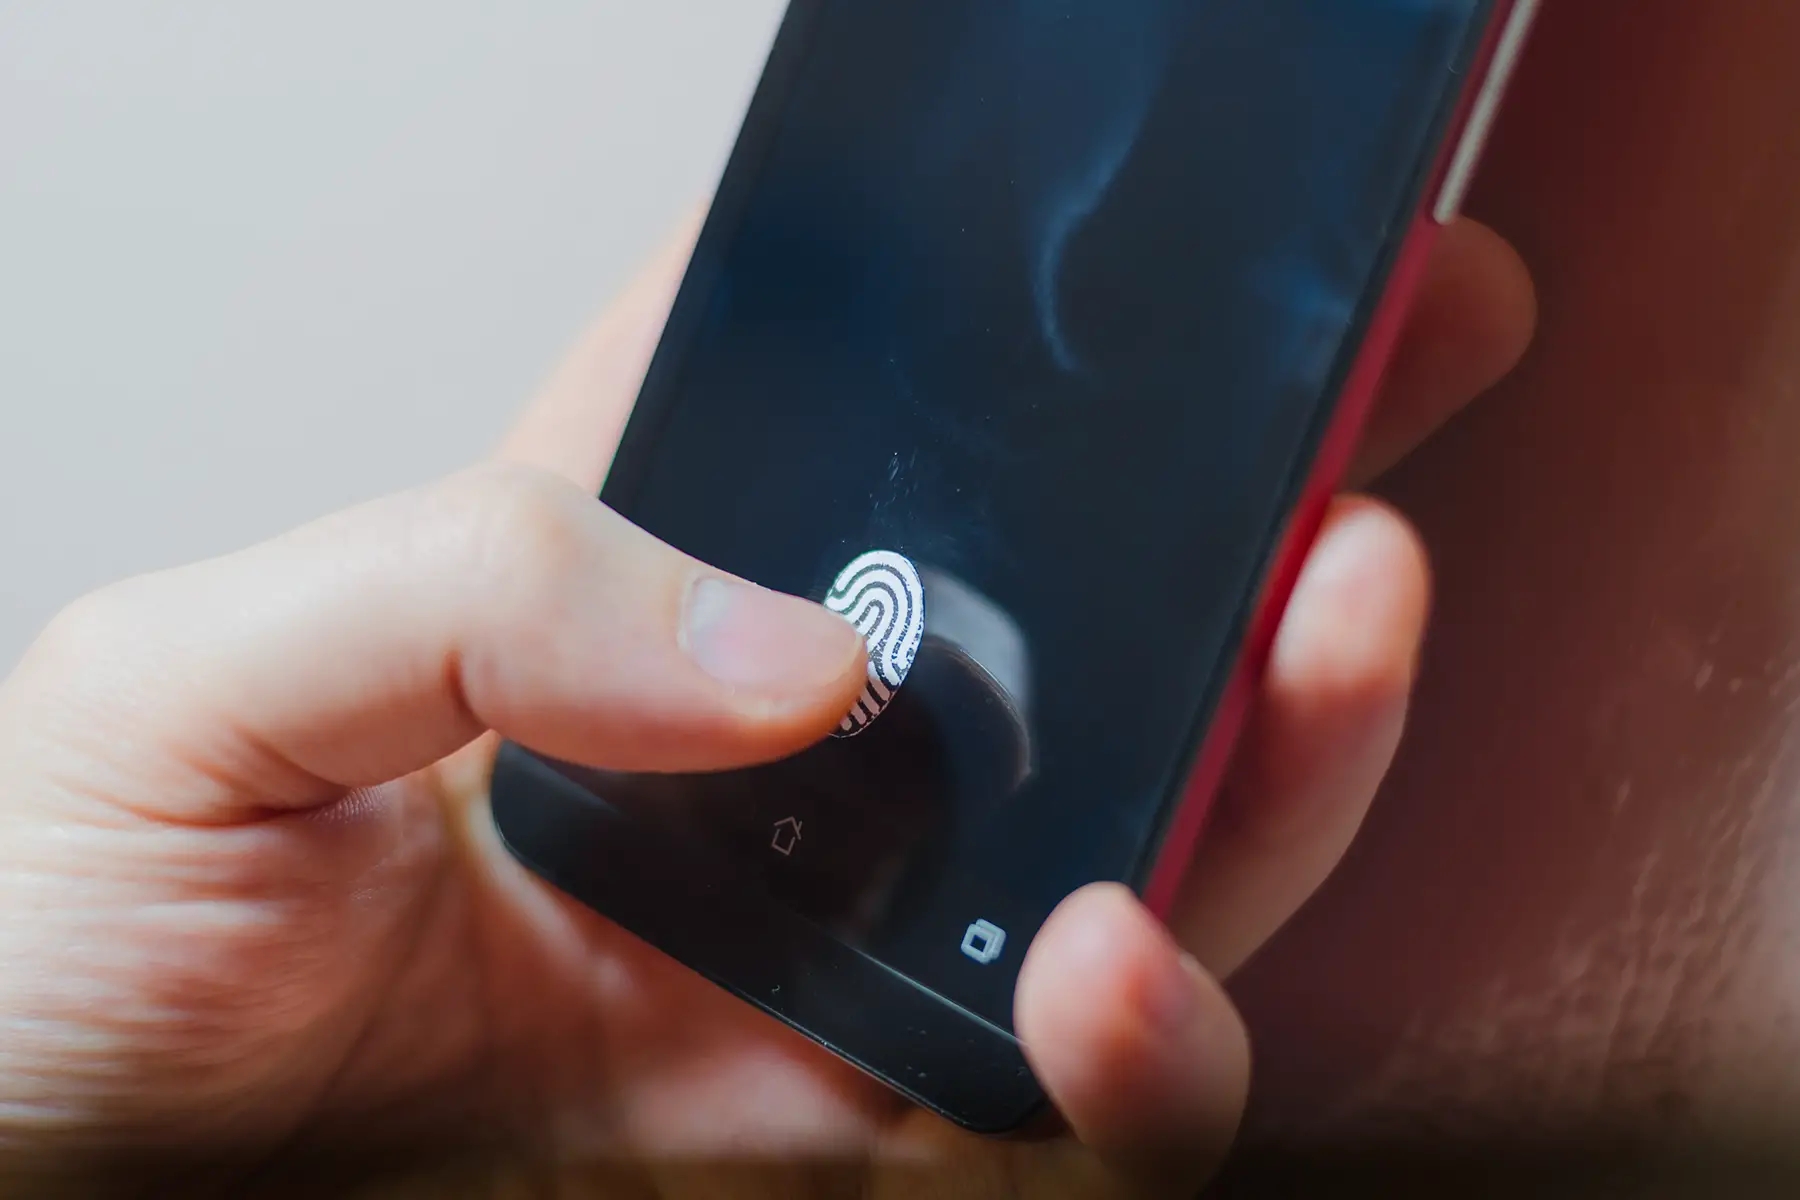 Fingerprint scan on a mobile phone